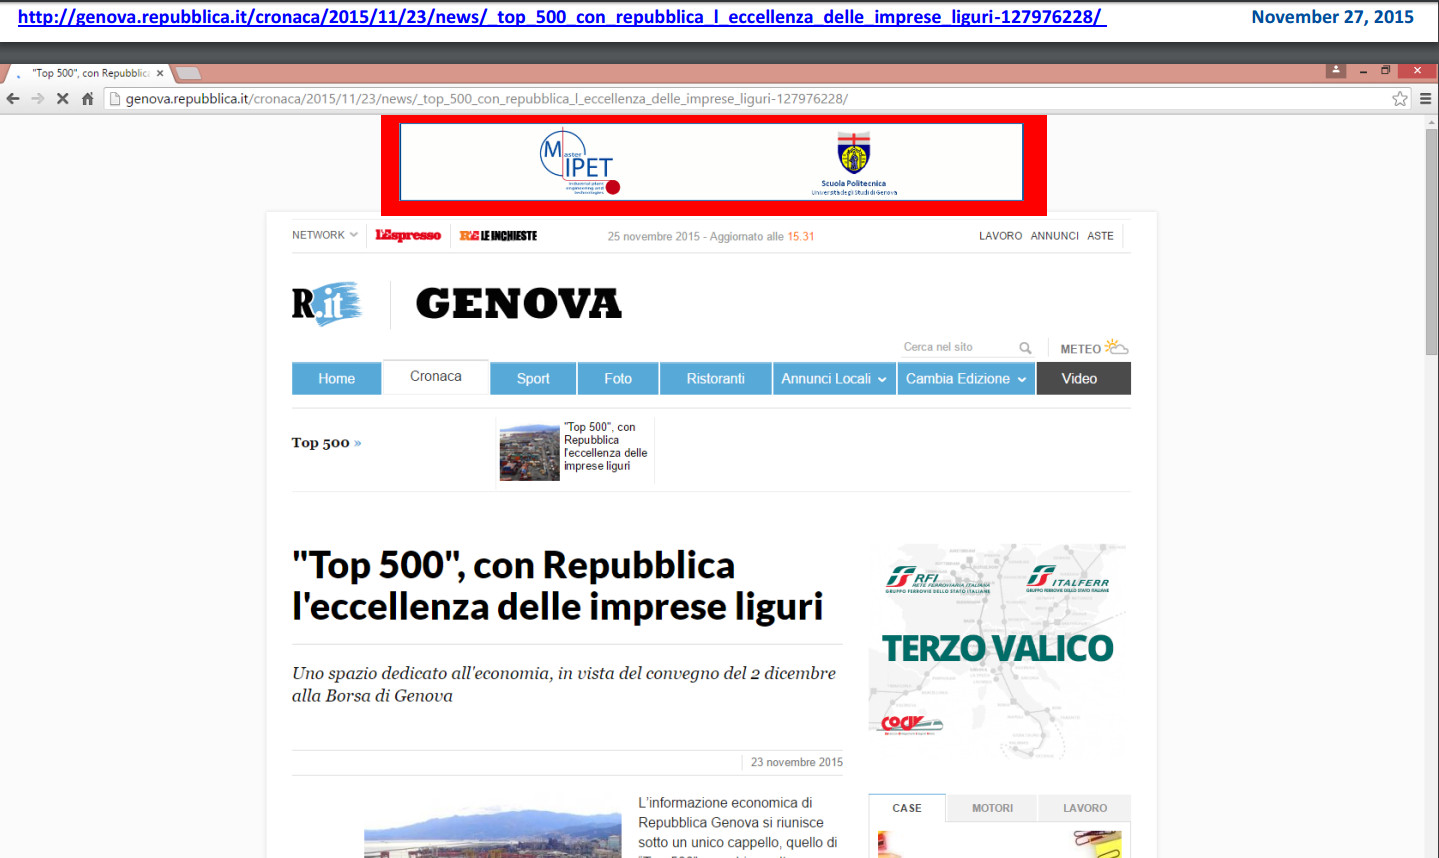 Repubblica, December 3, 2015, Special Insert: Top 500 Web Site